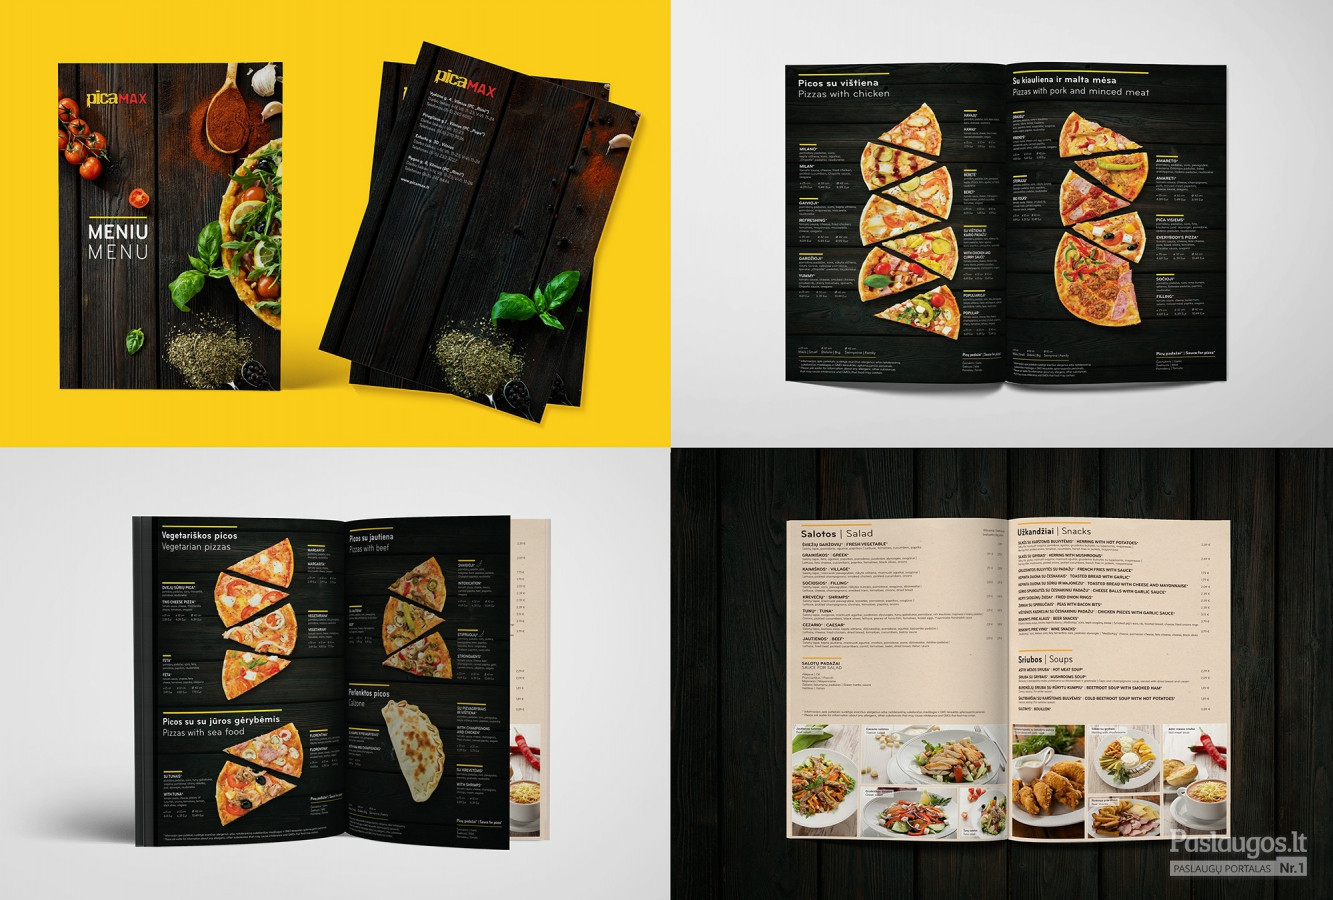 Meniu / Menu | PICA MAX
Peržiūrėti čia / Review here  http://issuu.com/salvitadesign/docs/pagrindinis_meniu_prw…
Idea, food styling, design - Salvita